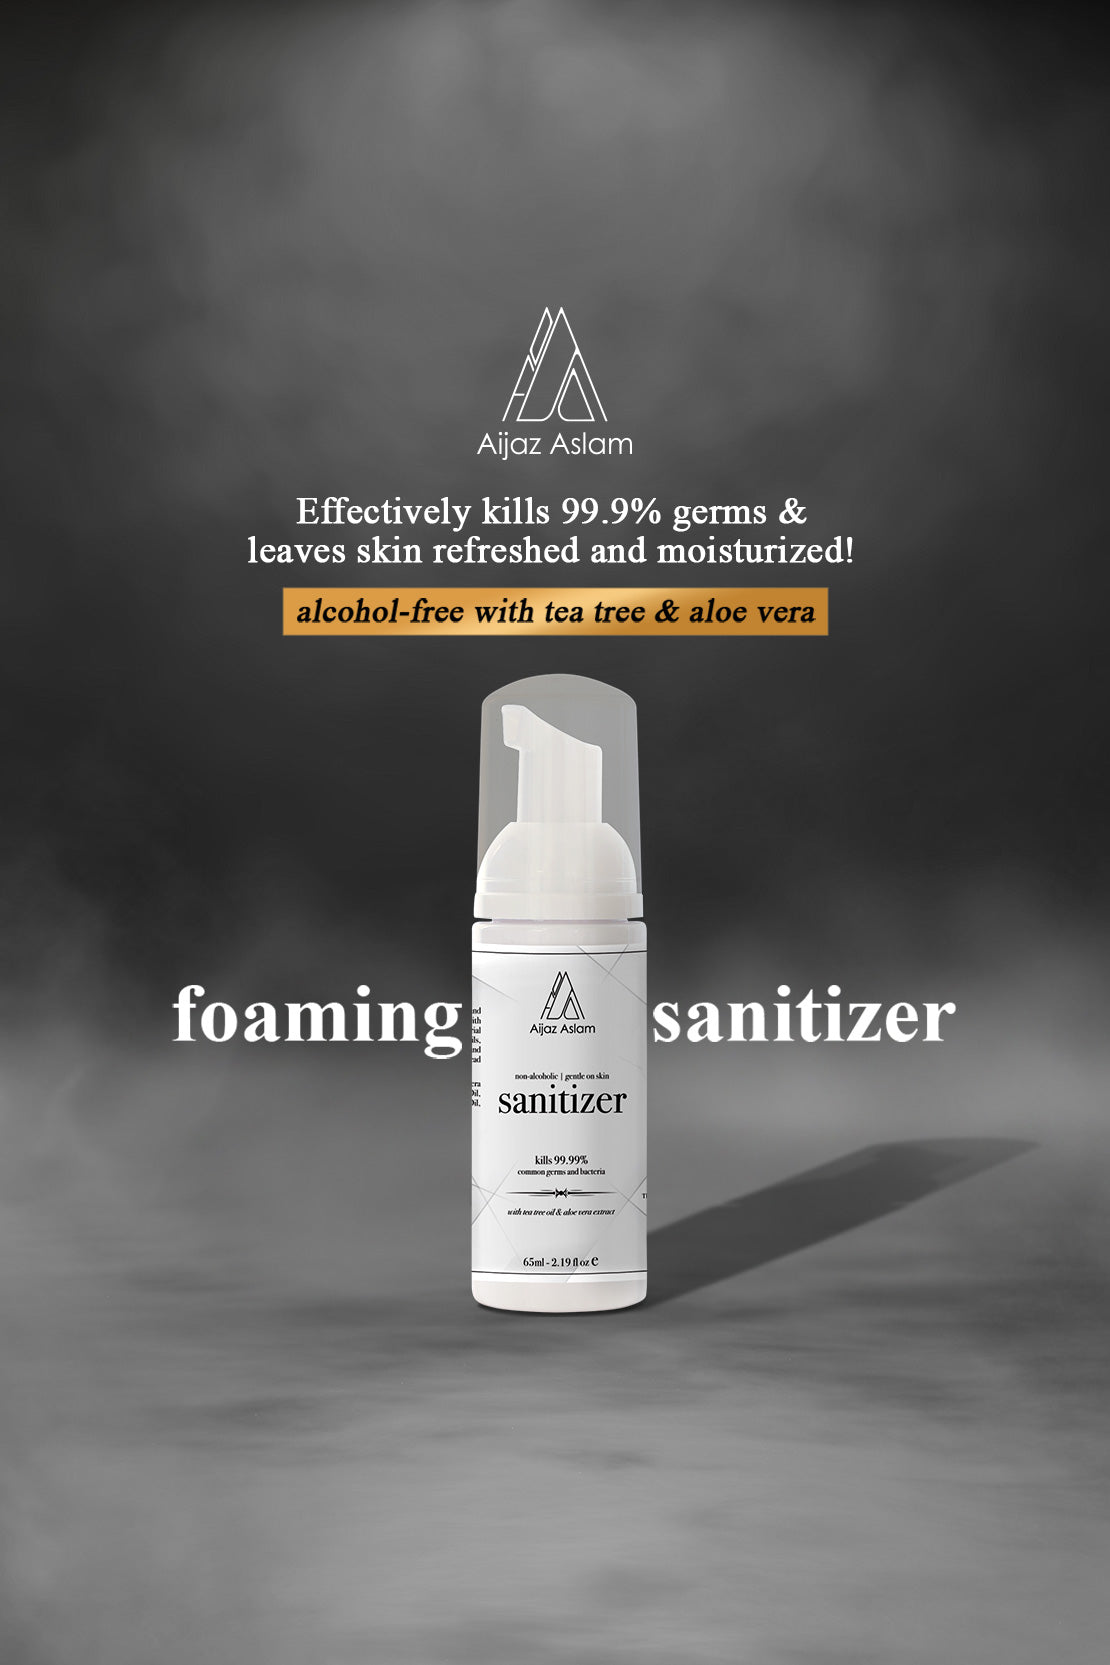 AA - Sanitizer 60ml - Alcohol Free